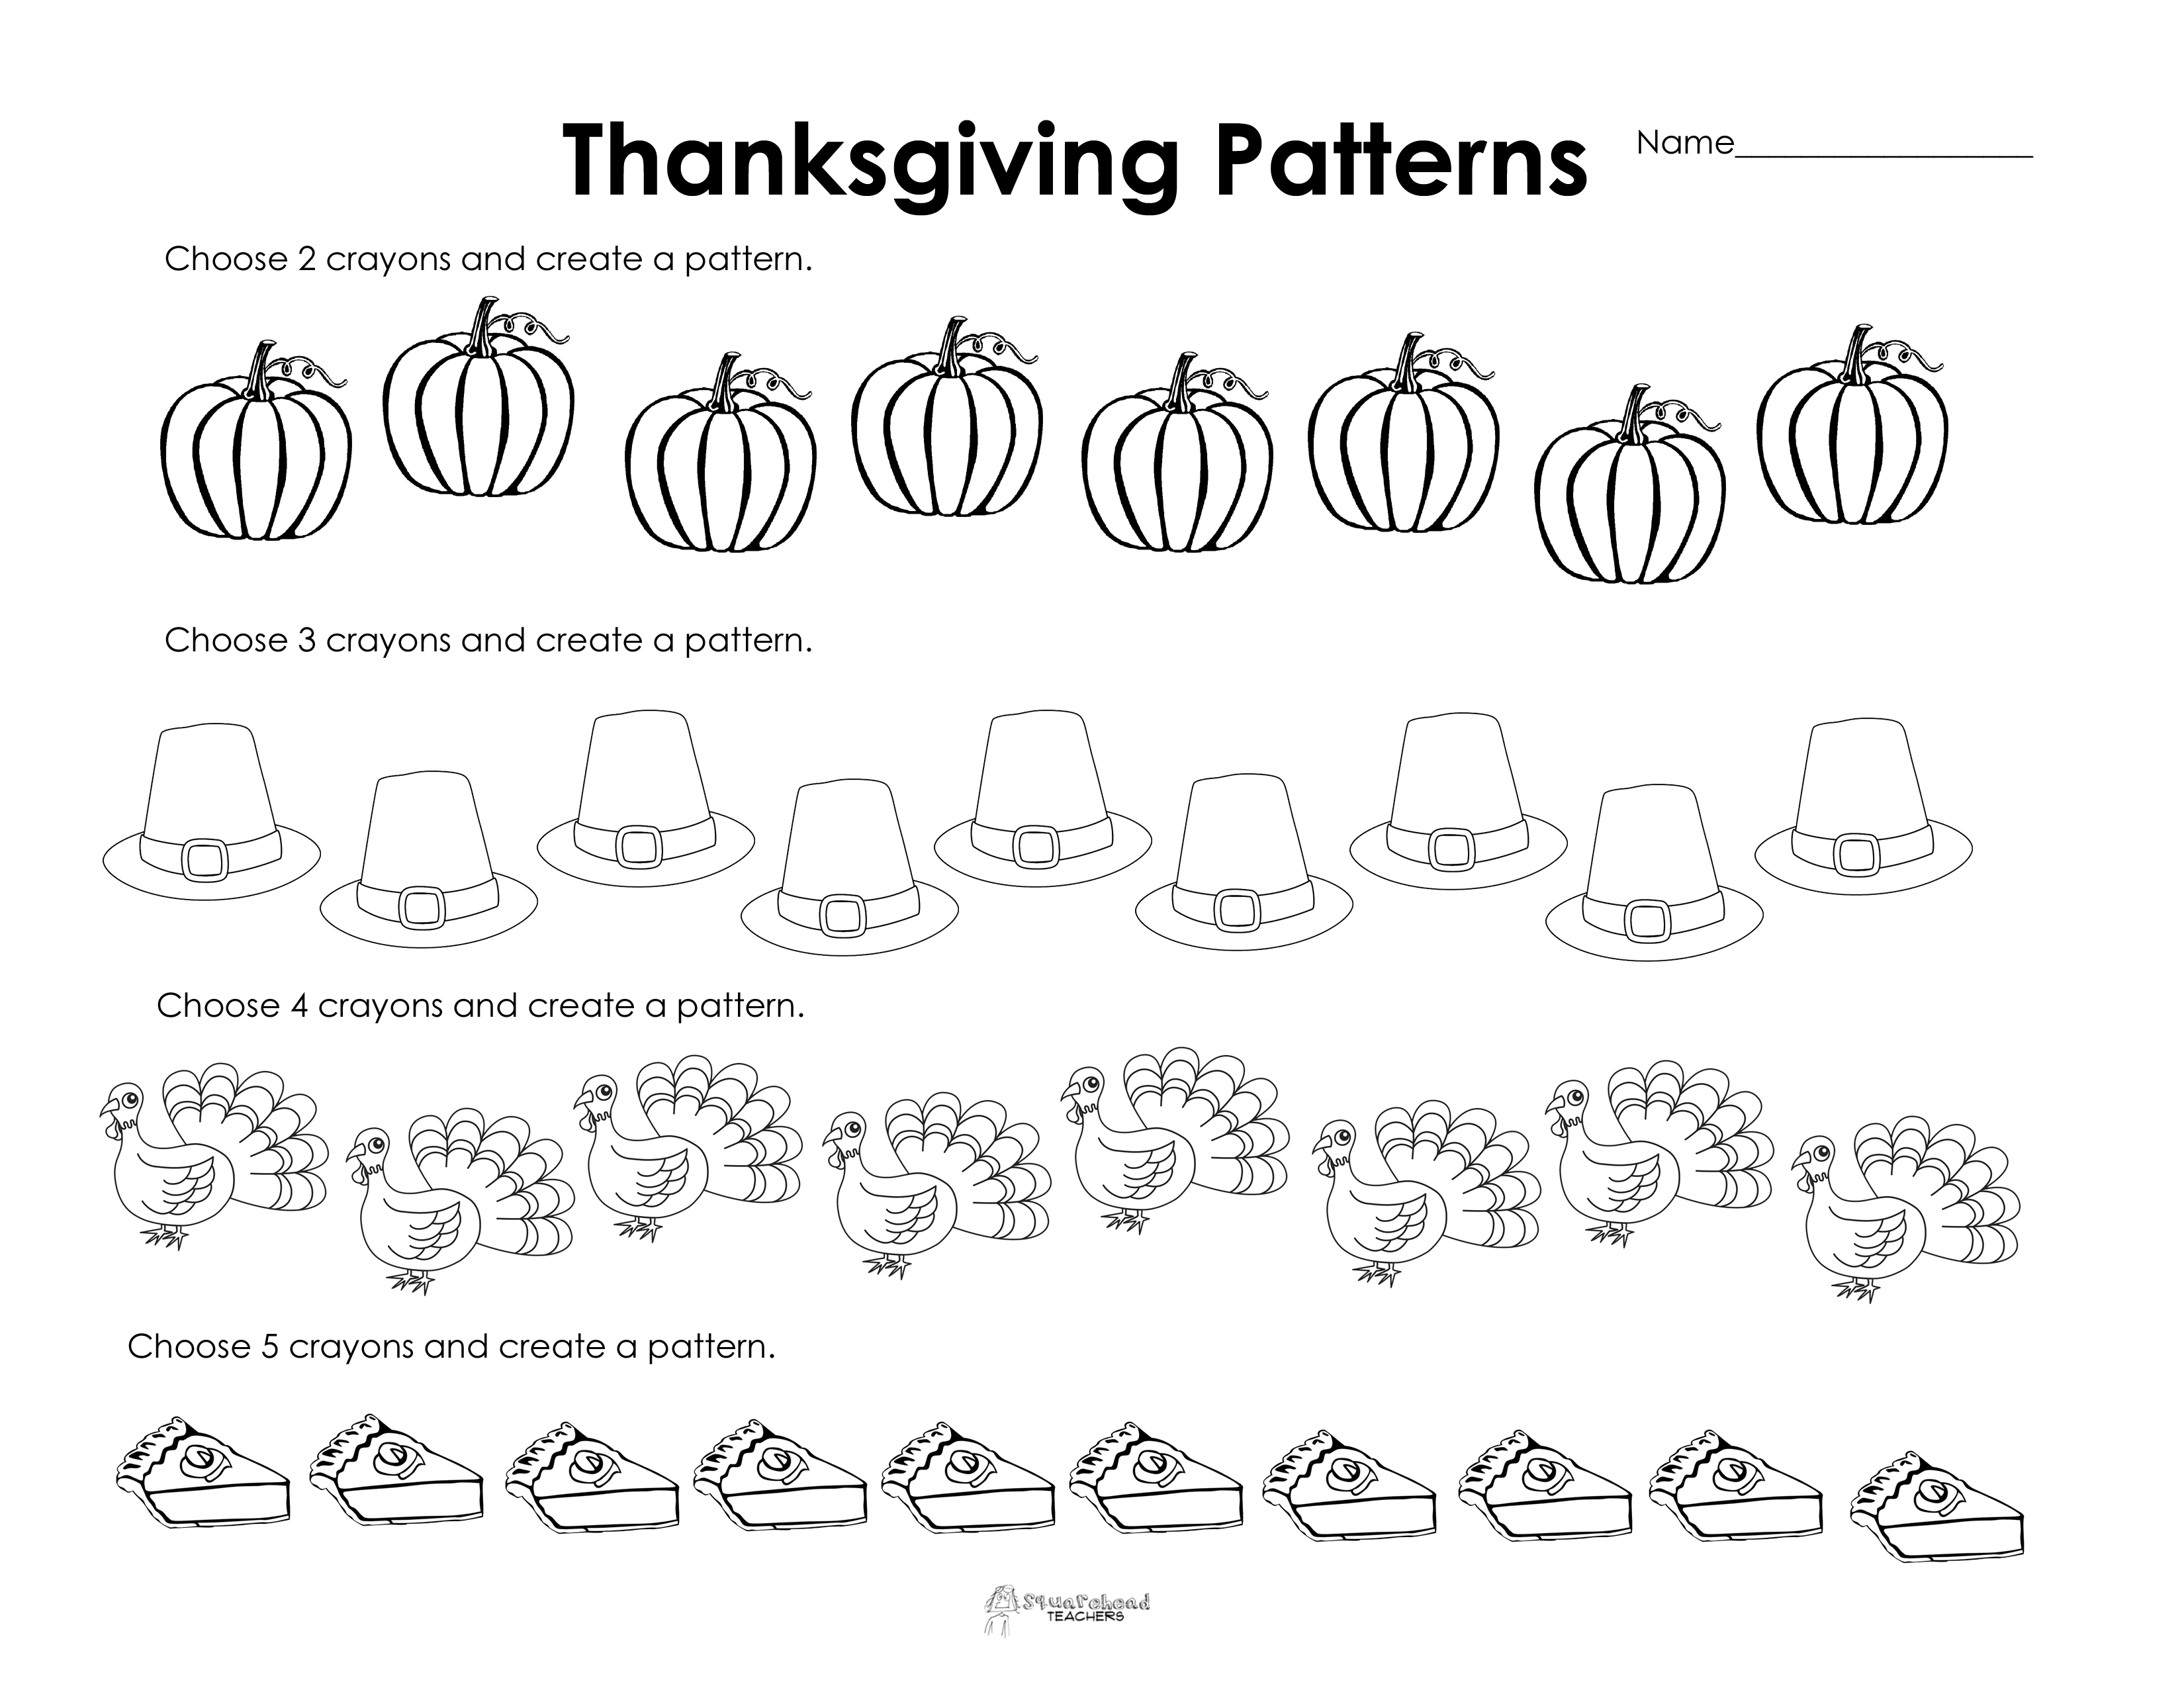 Making Patterns Thanksgiving Style Free Worksheet Squarehead Teachers